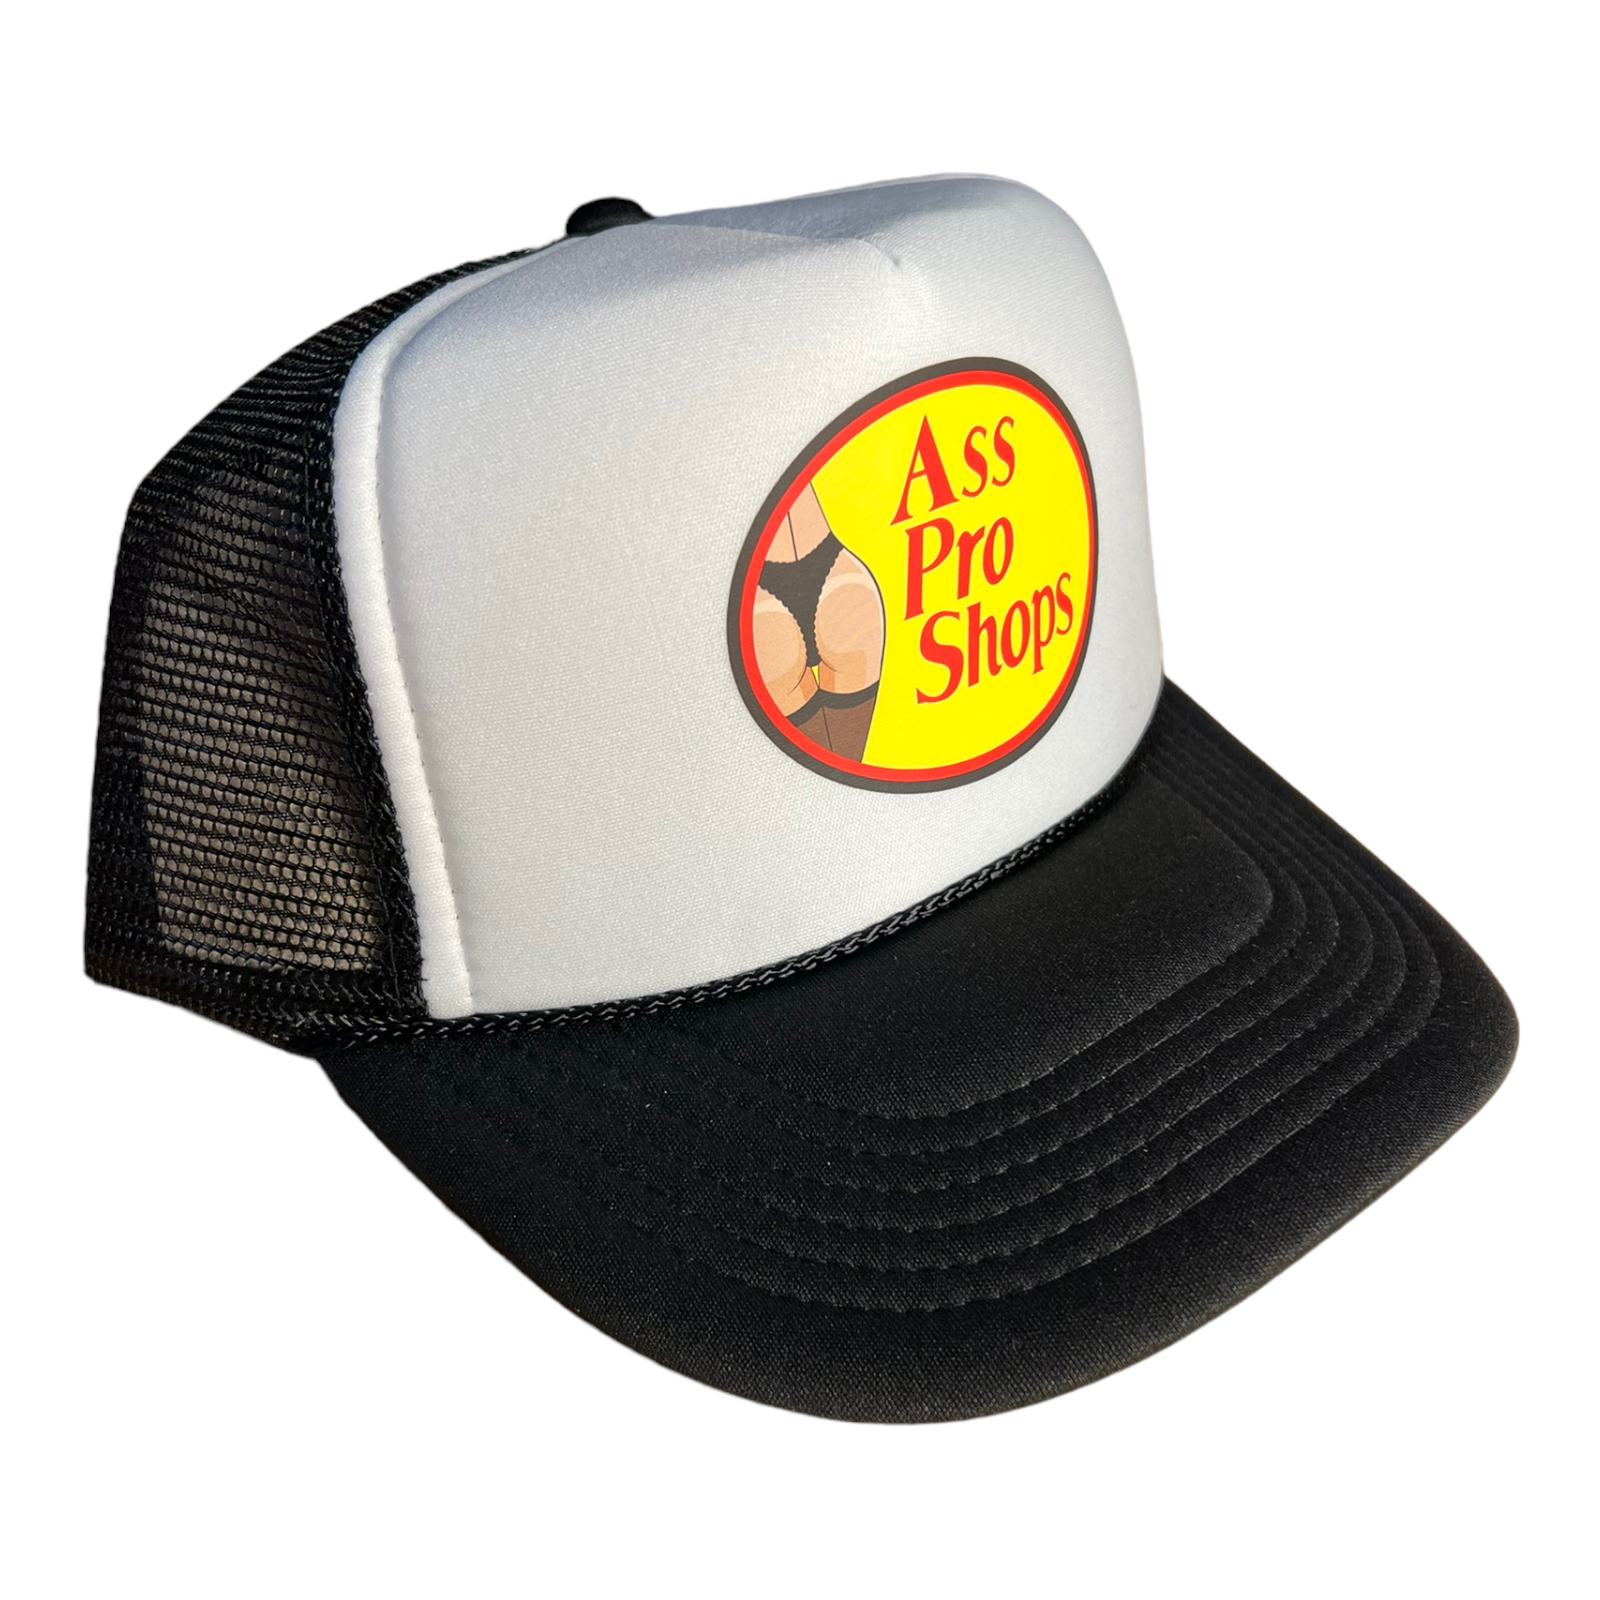 Ass Pro Shops Trucker Hat Funny Trucker Hat Black/White – FunnyTruckerHats